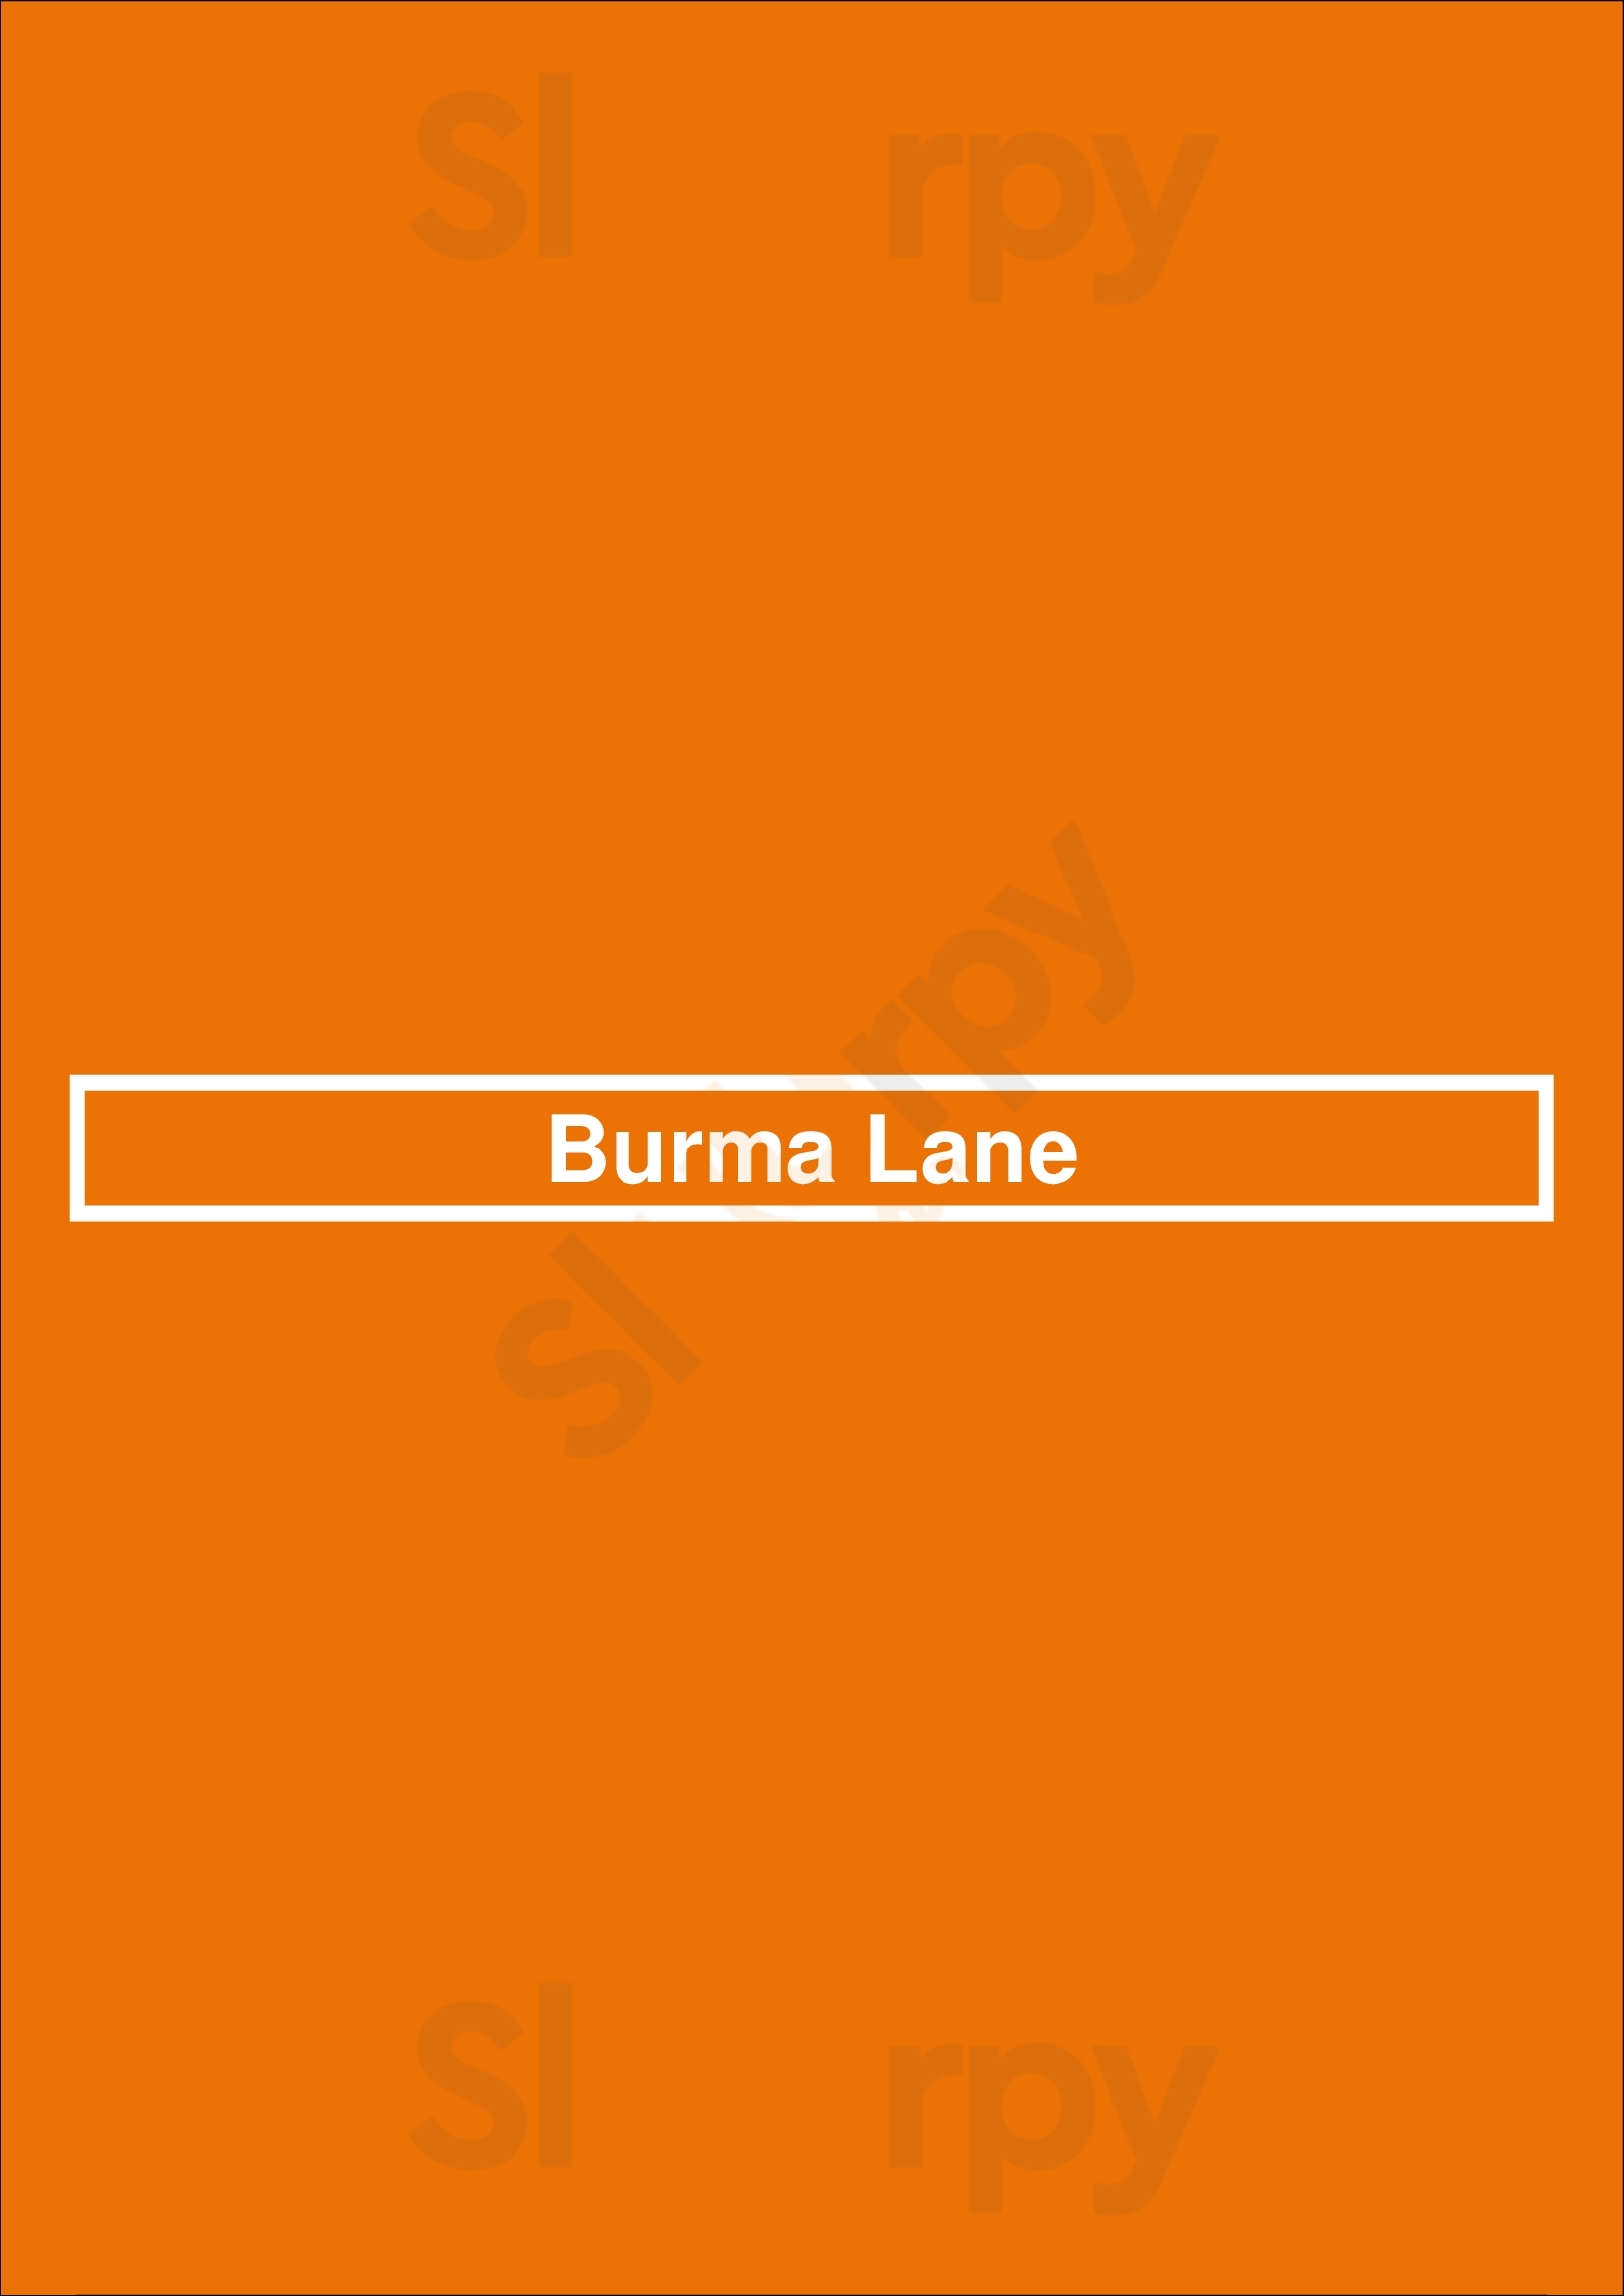 Burma Lane Melbourne Menu - 1